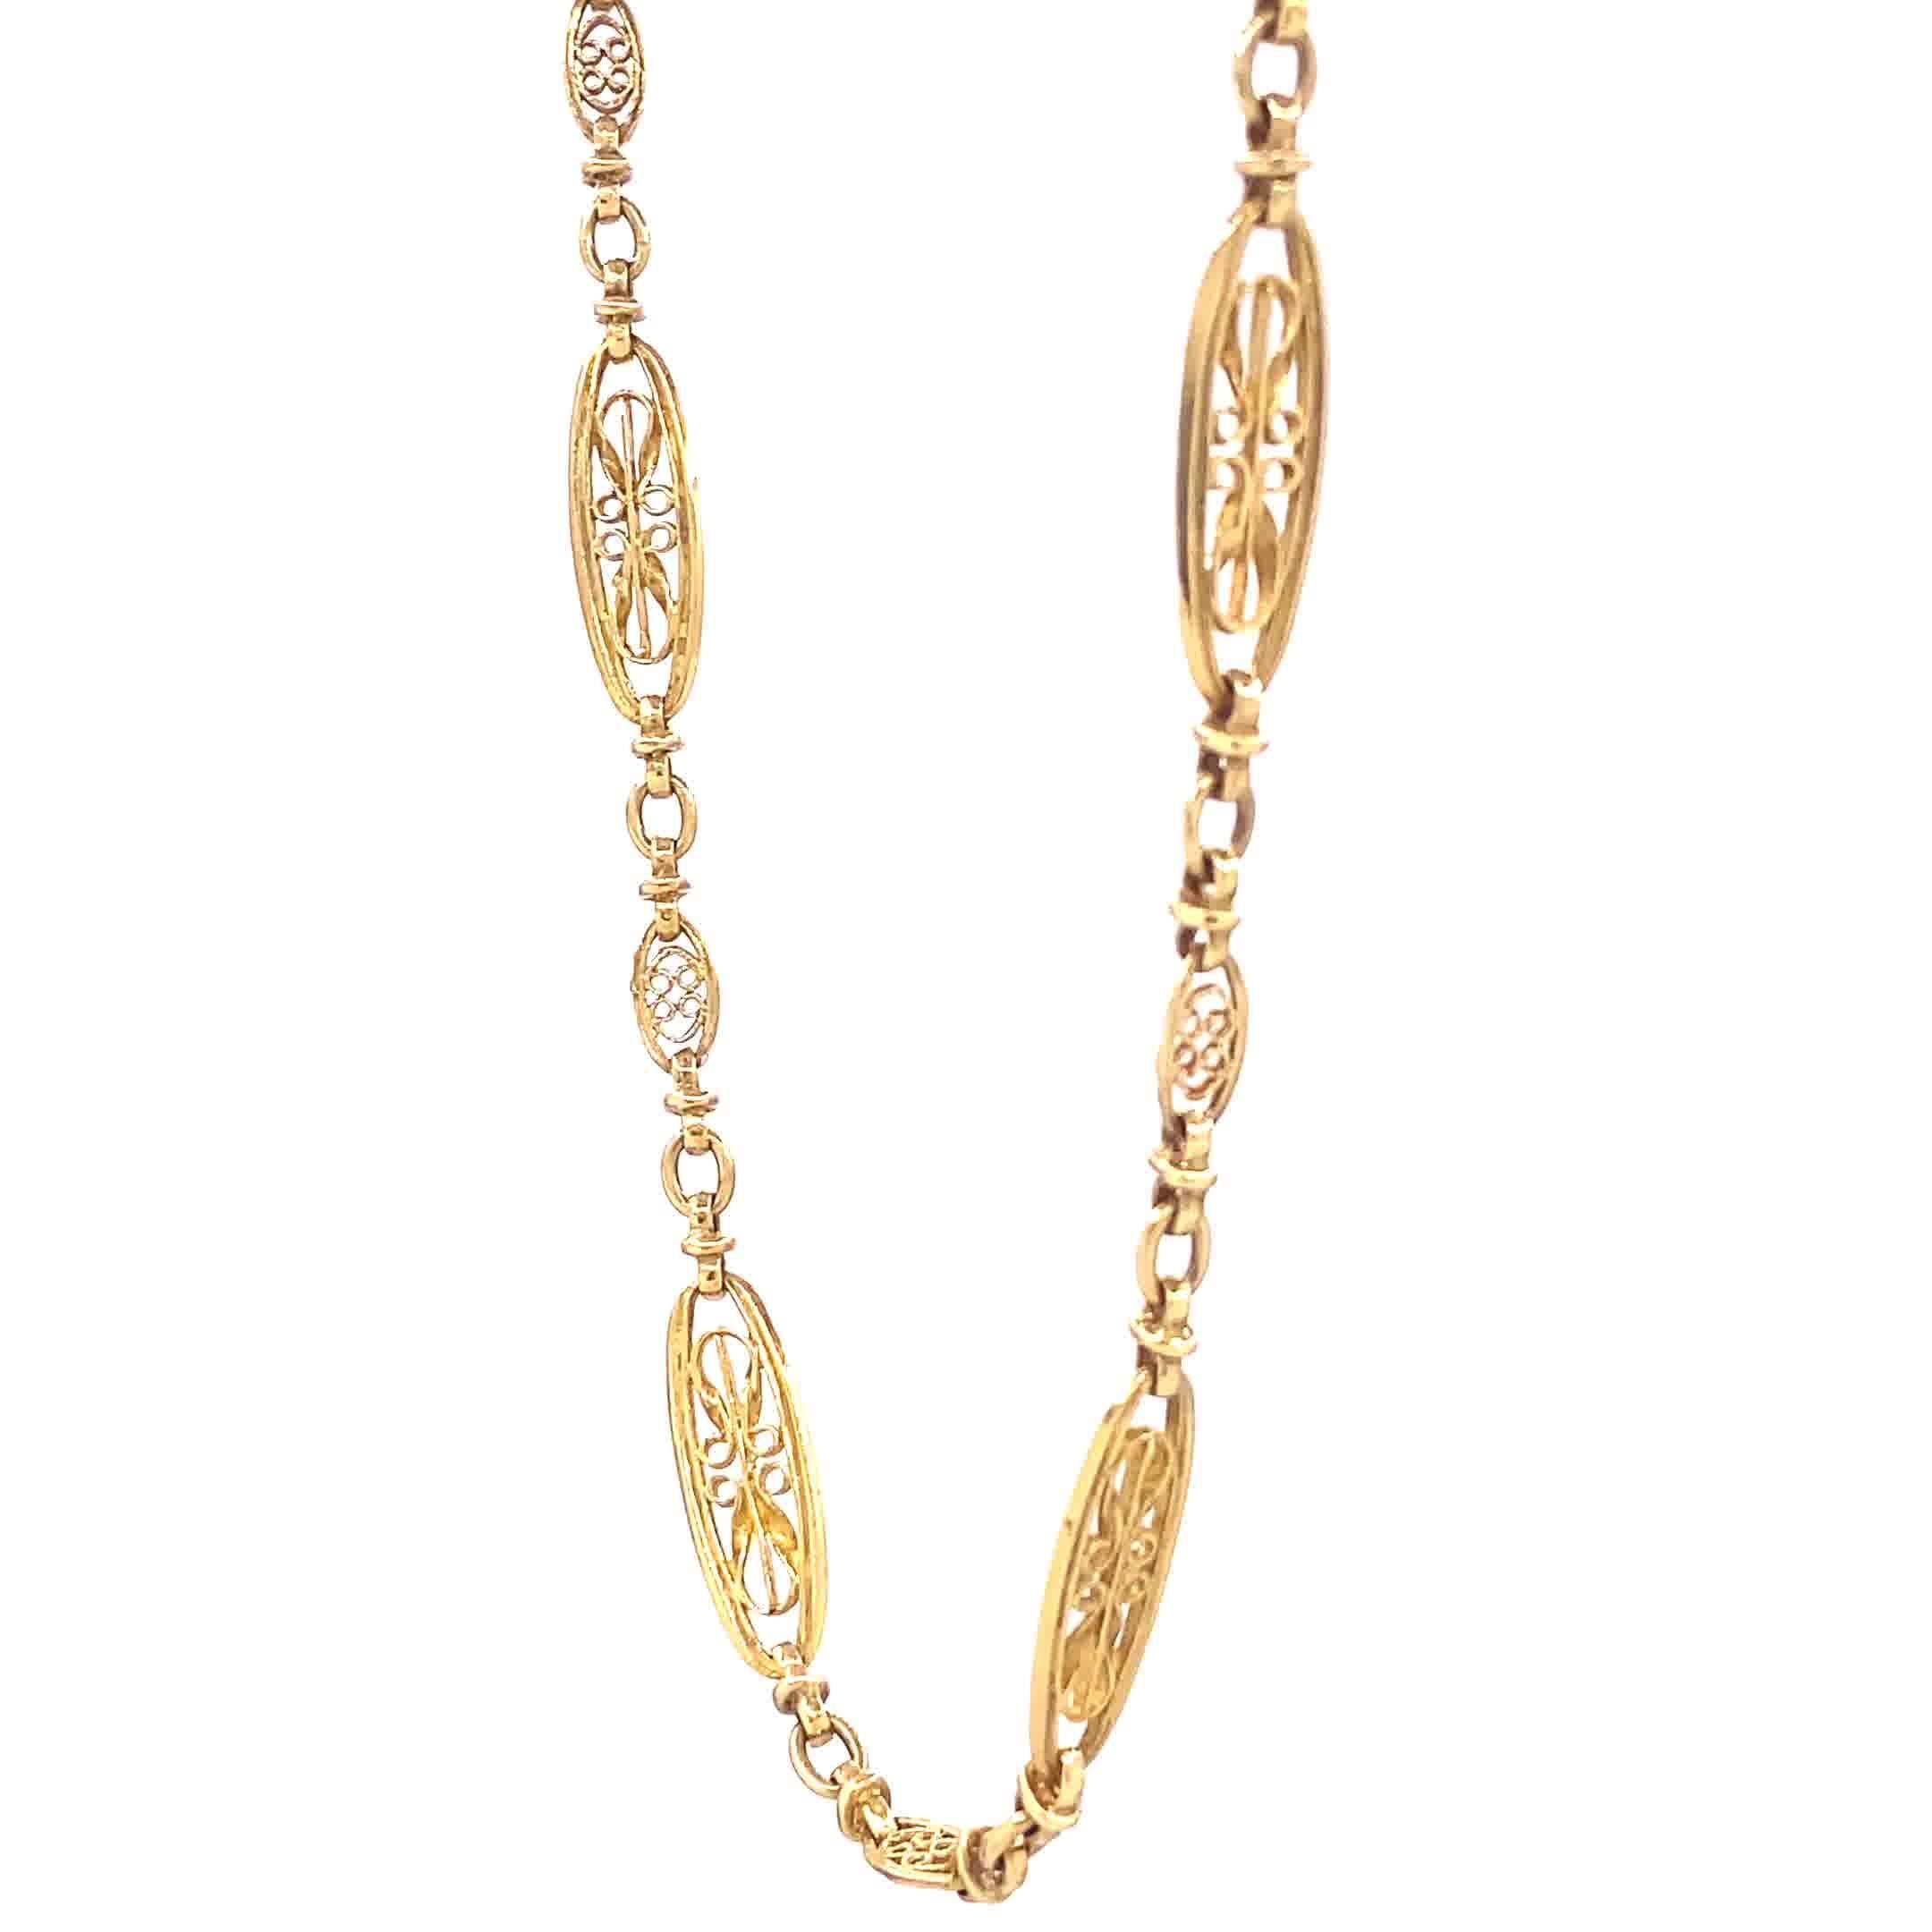 Belle Époque Antique French Filigree Fancy Link 18 Karat Gold Chain